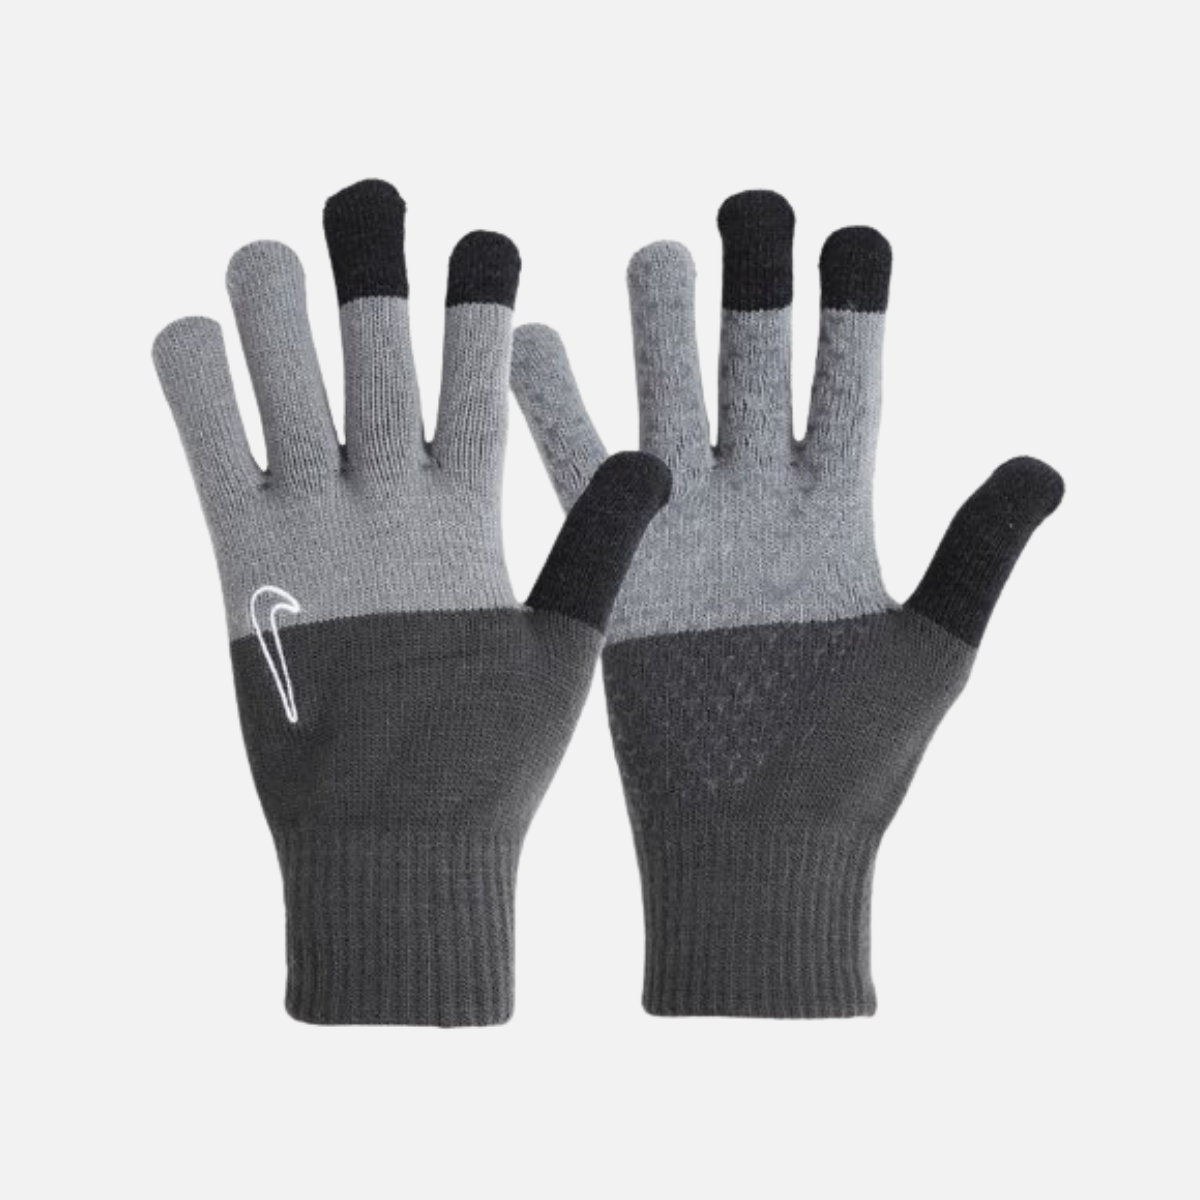 Nike knit tech grip winter gloves -Black/Grey